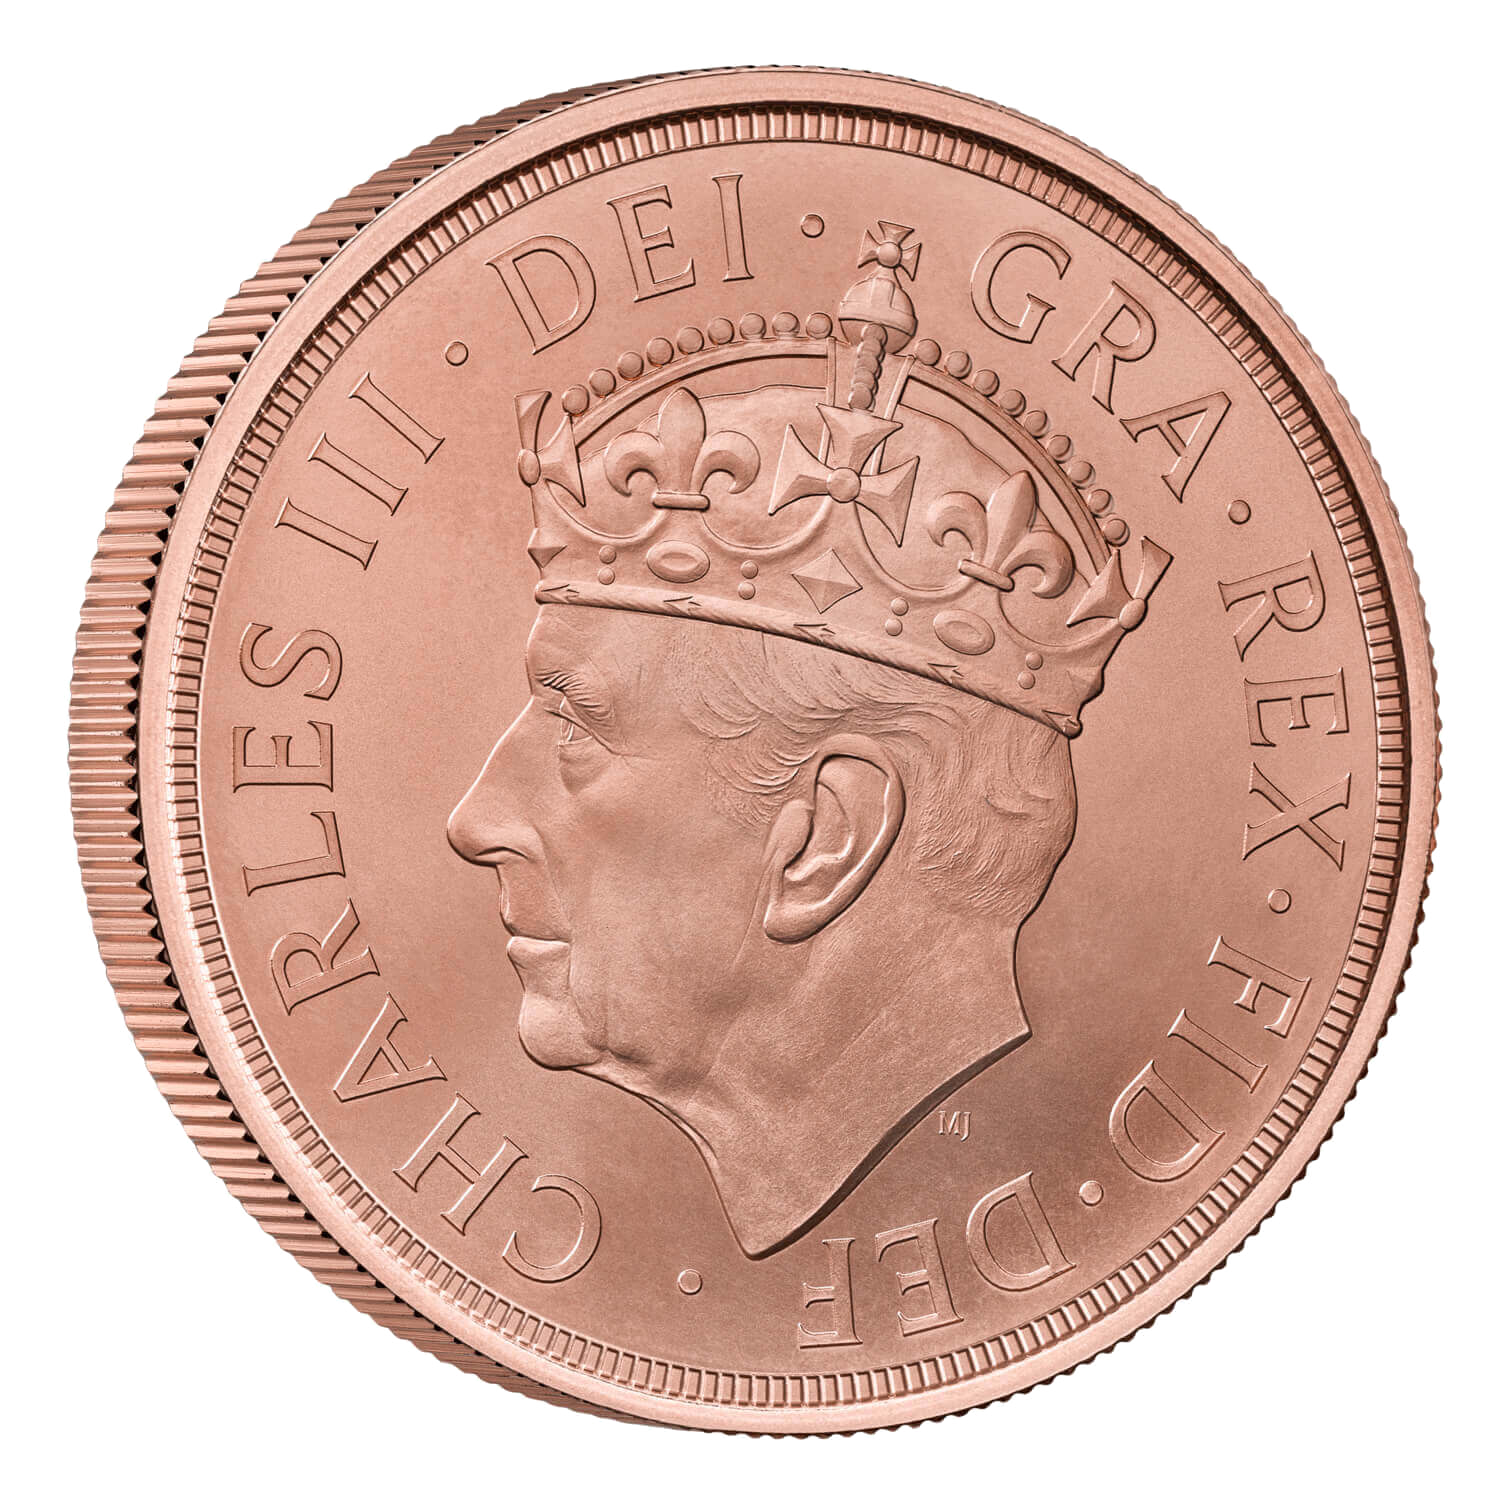 2023 British Gold 5 Pound Sovereign - King Charles III Coronation